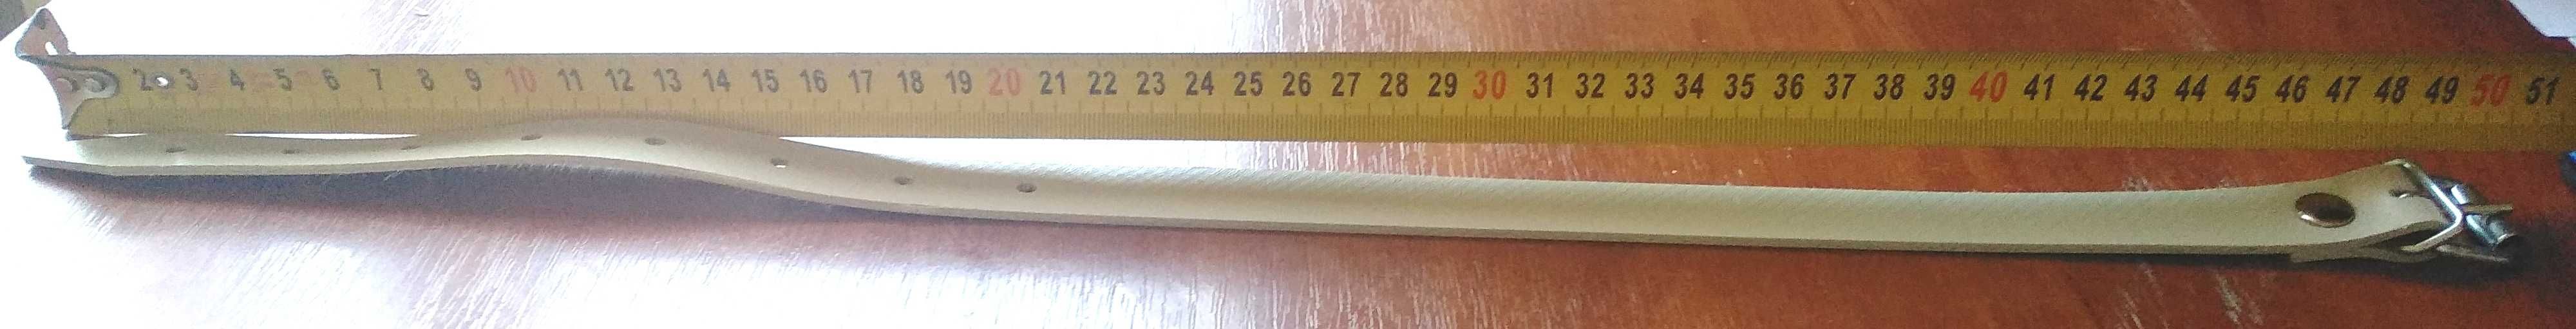 Ремешки ПВХ с пряжкой 50 см